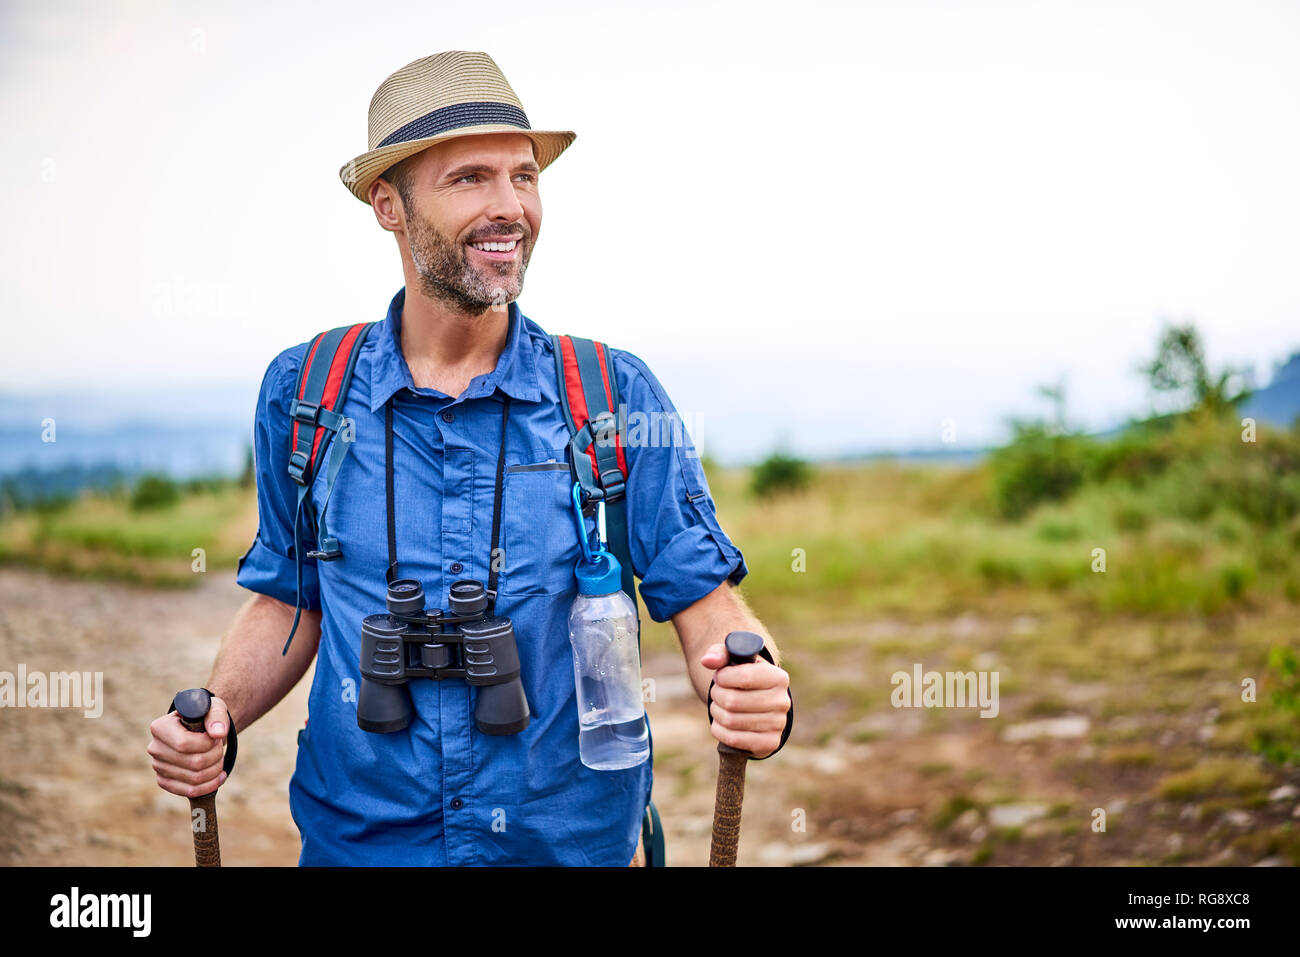 Smiling man with binoculars randonnée en montagne Banque D'Images